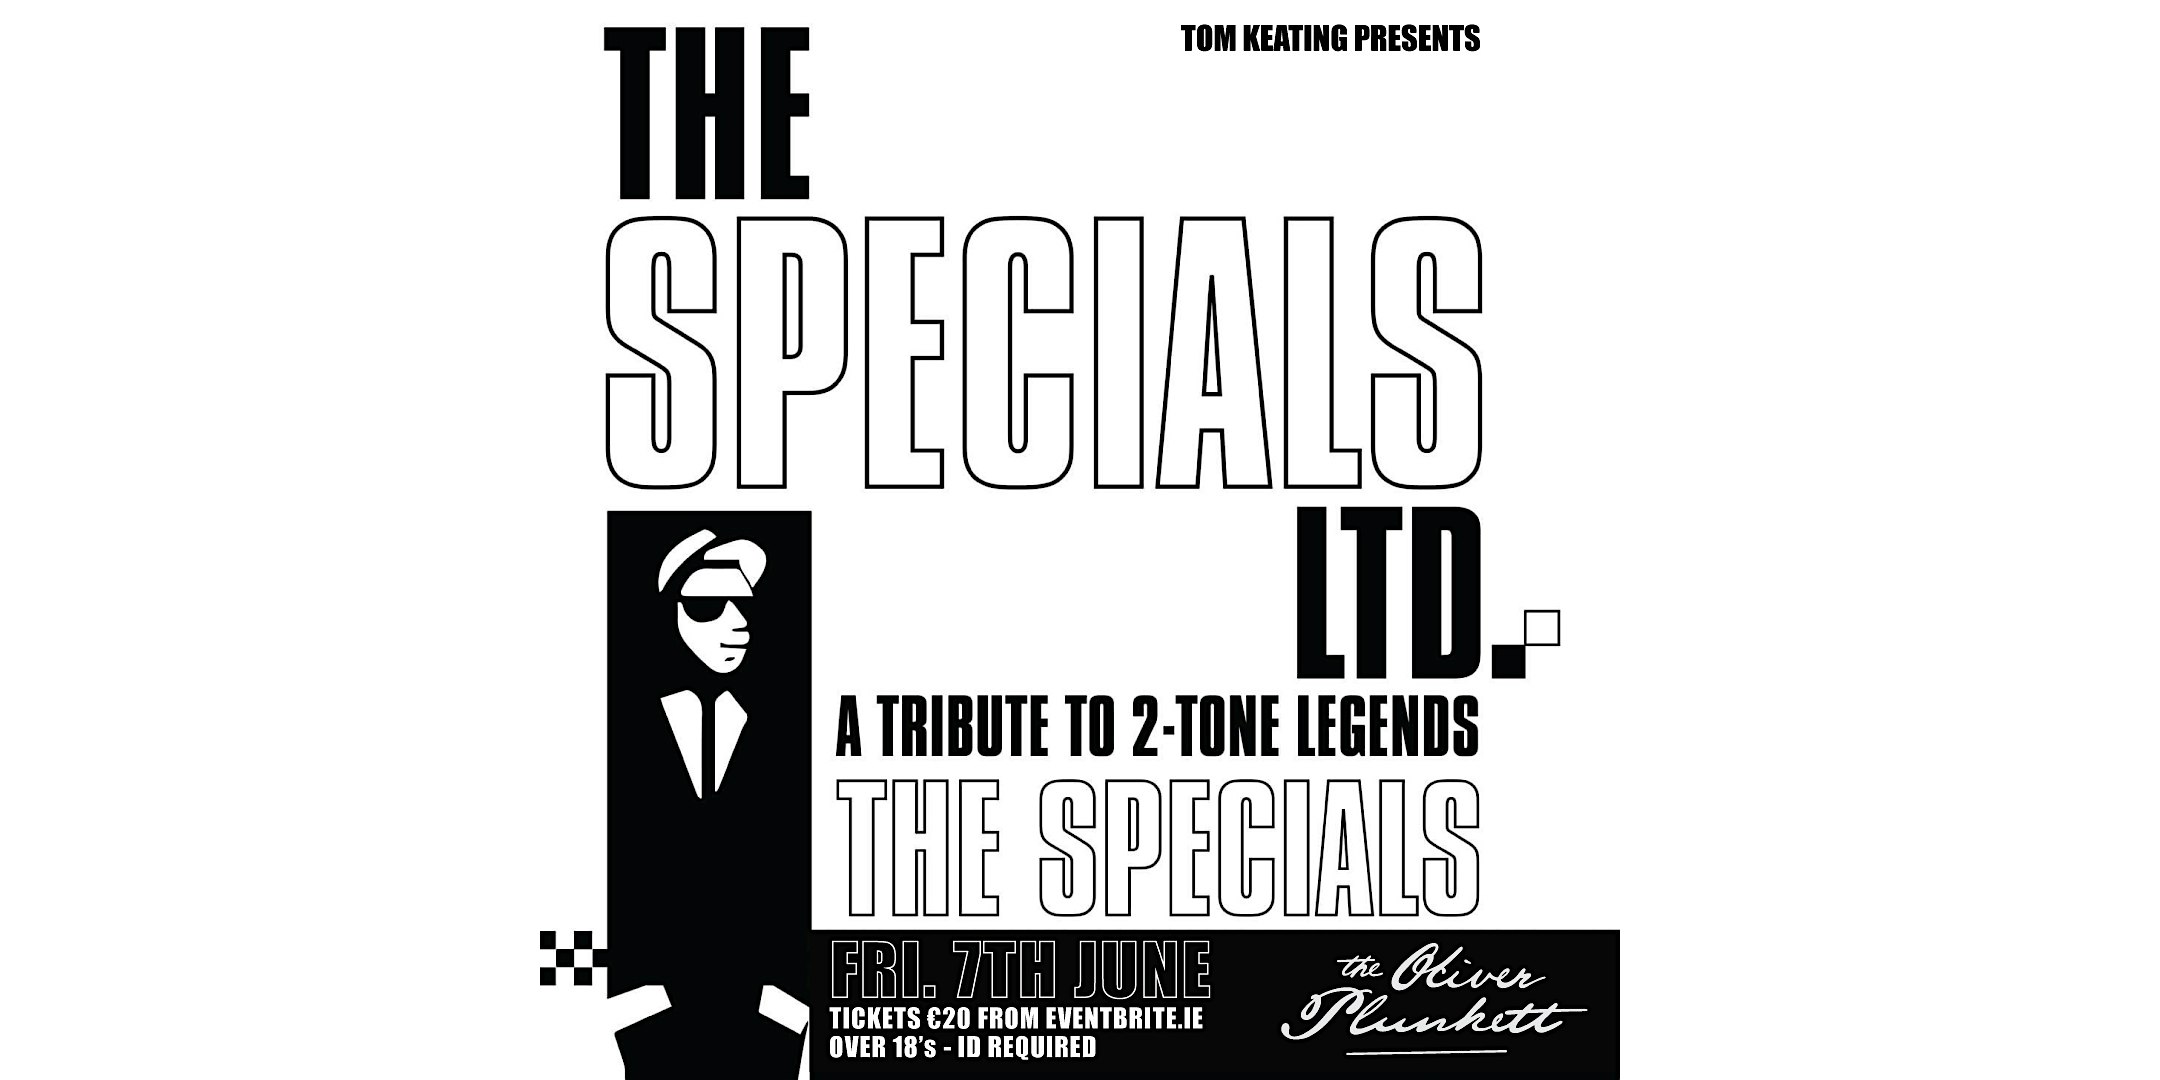 "The Specials Ltd" - A tribute to 2-tone legends The Specials